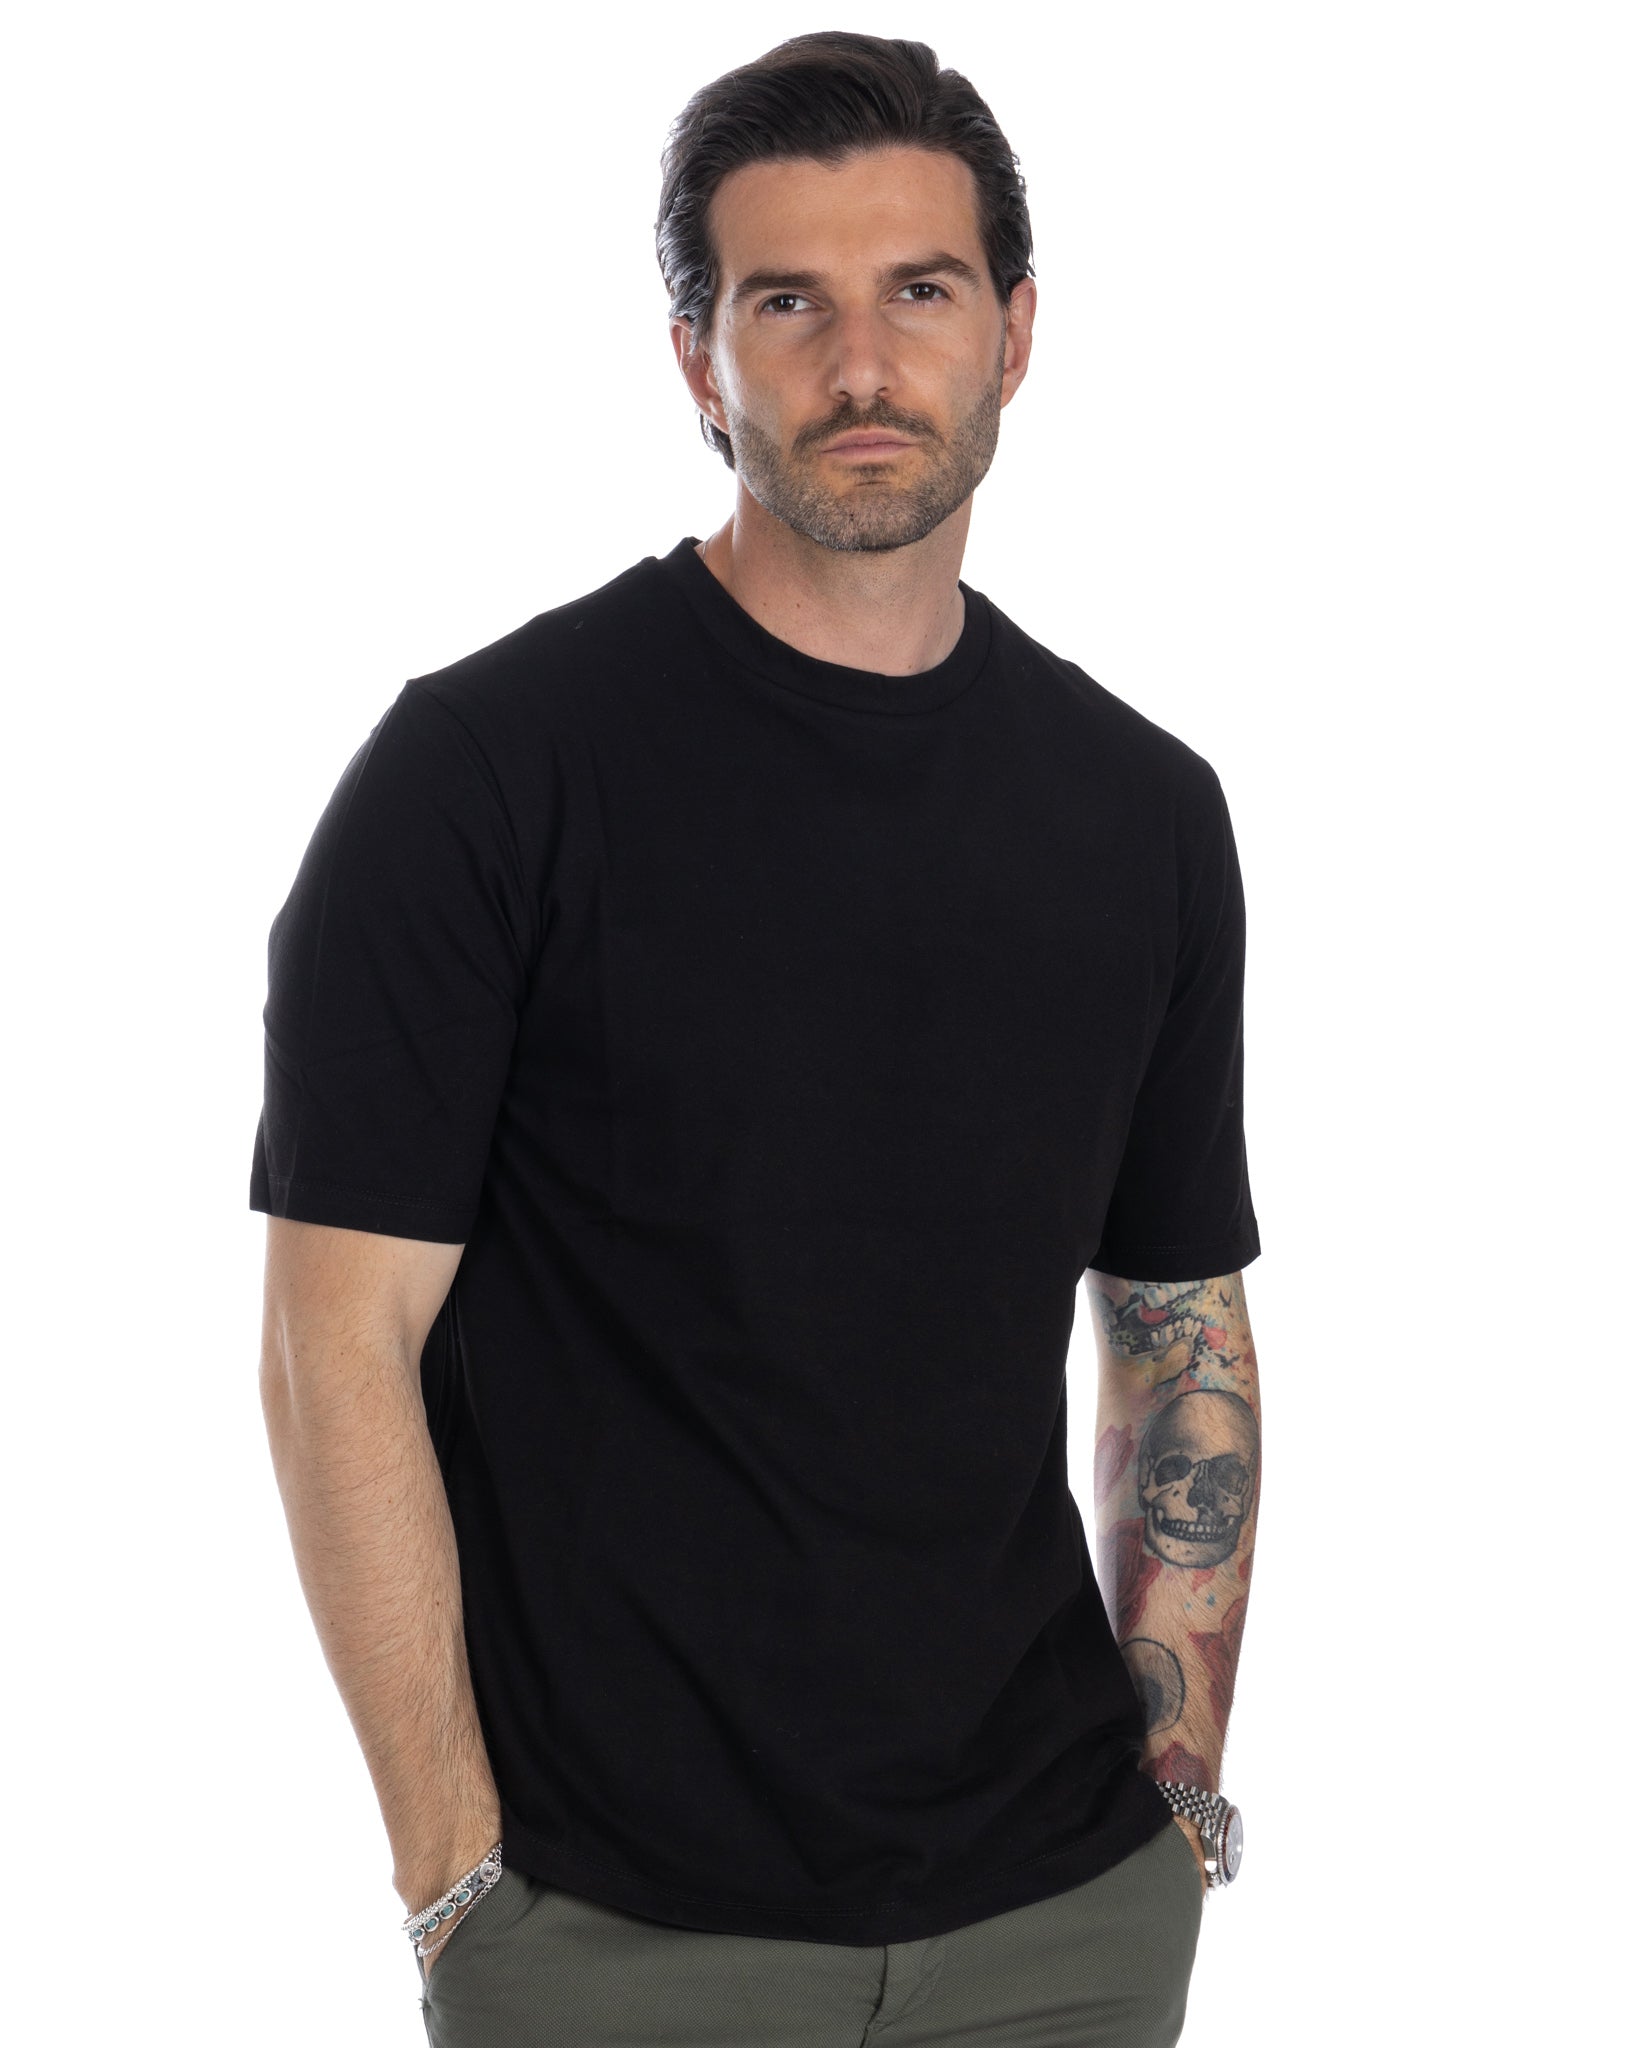 Tee - basic black cotton t-shirt